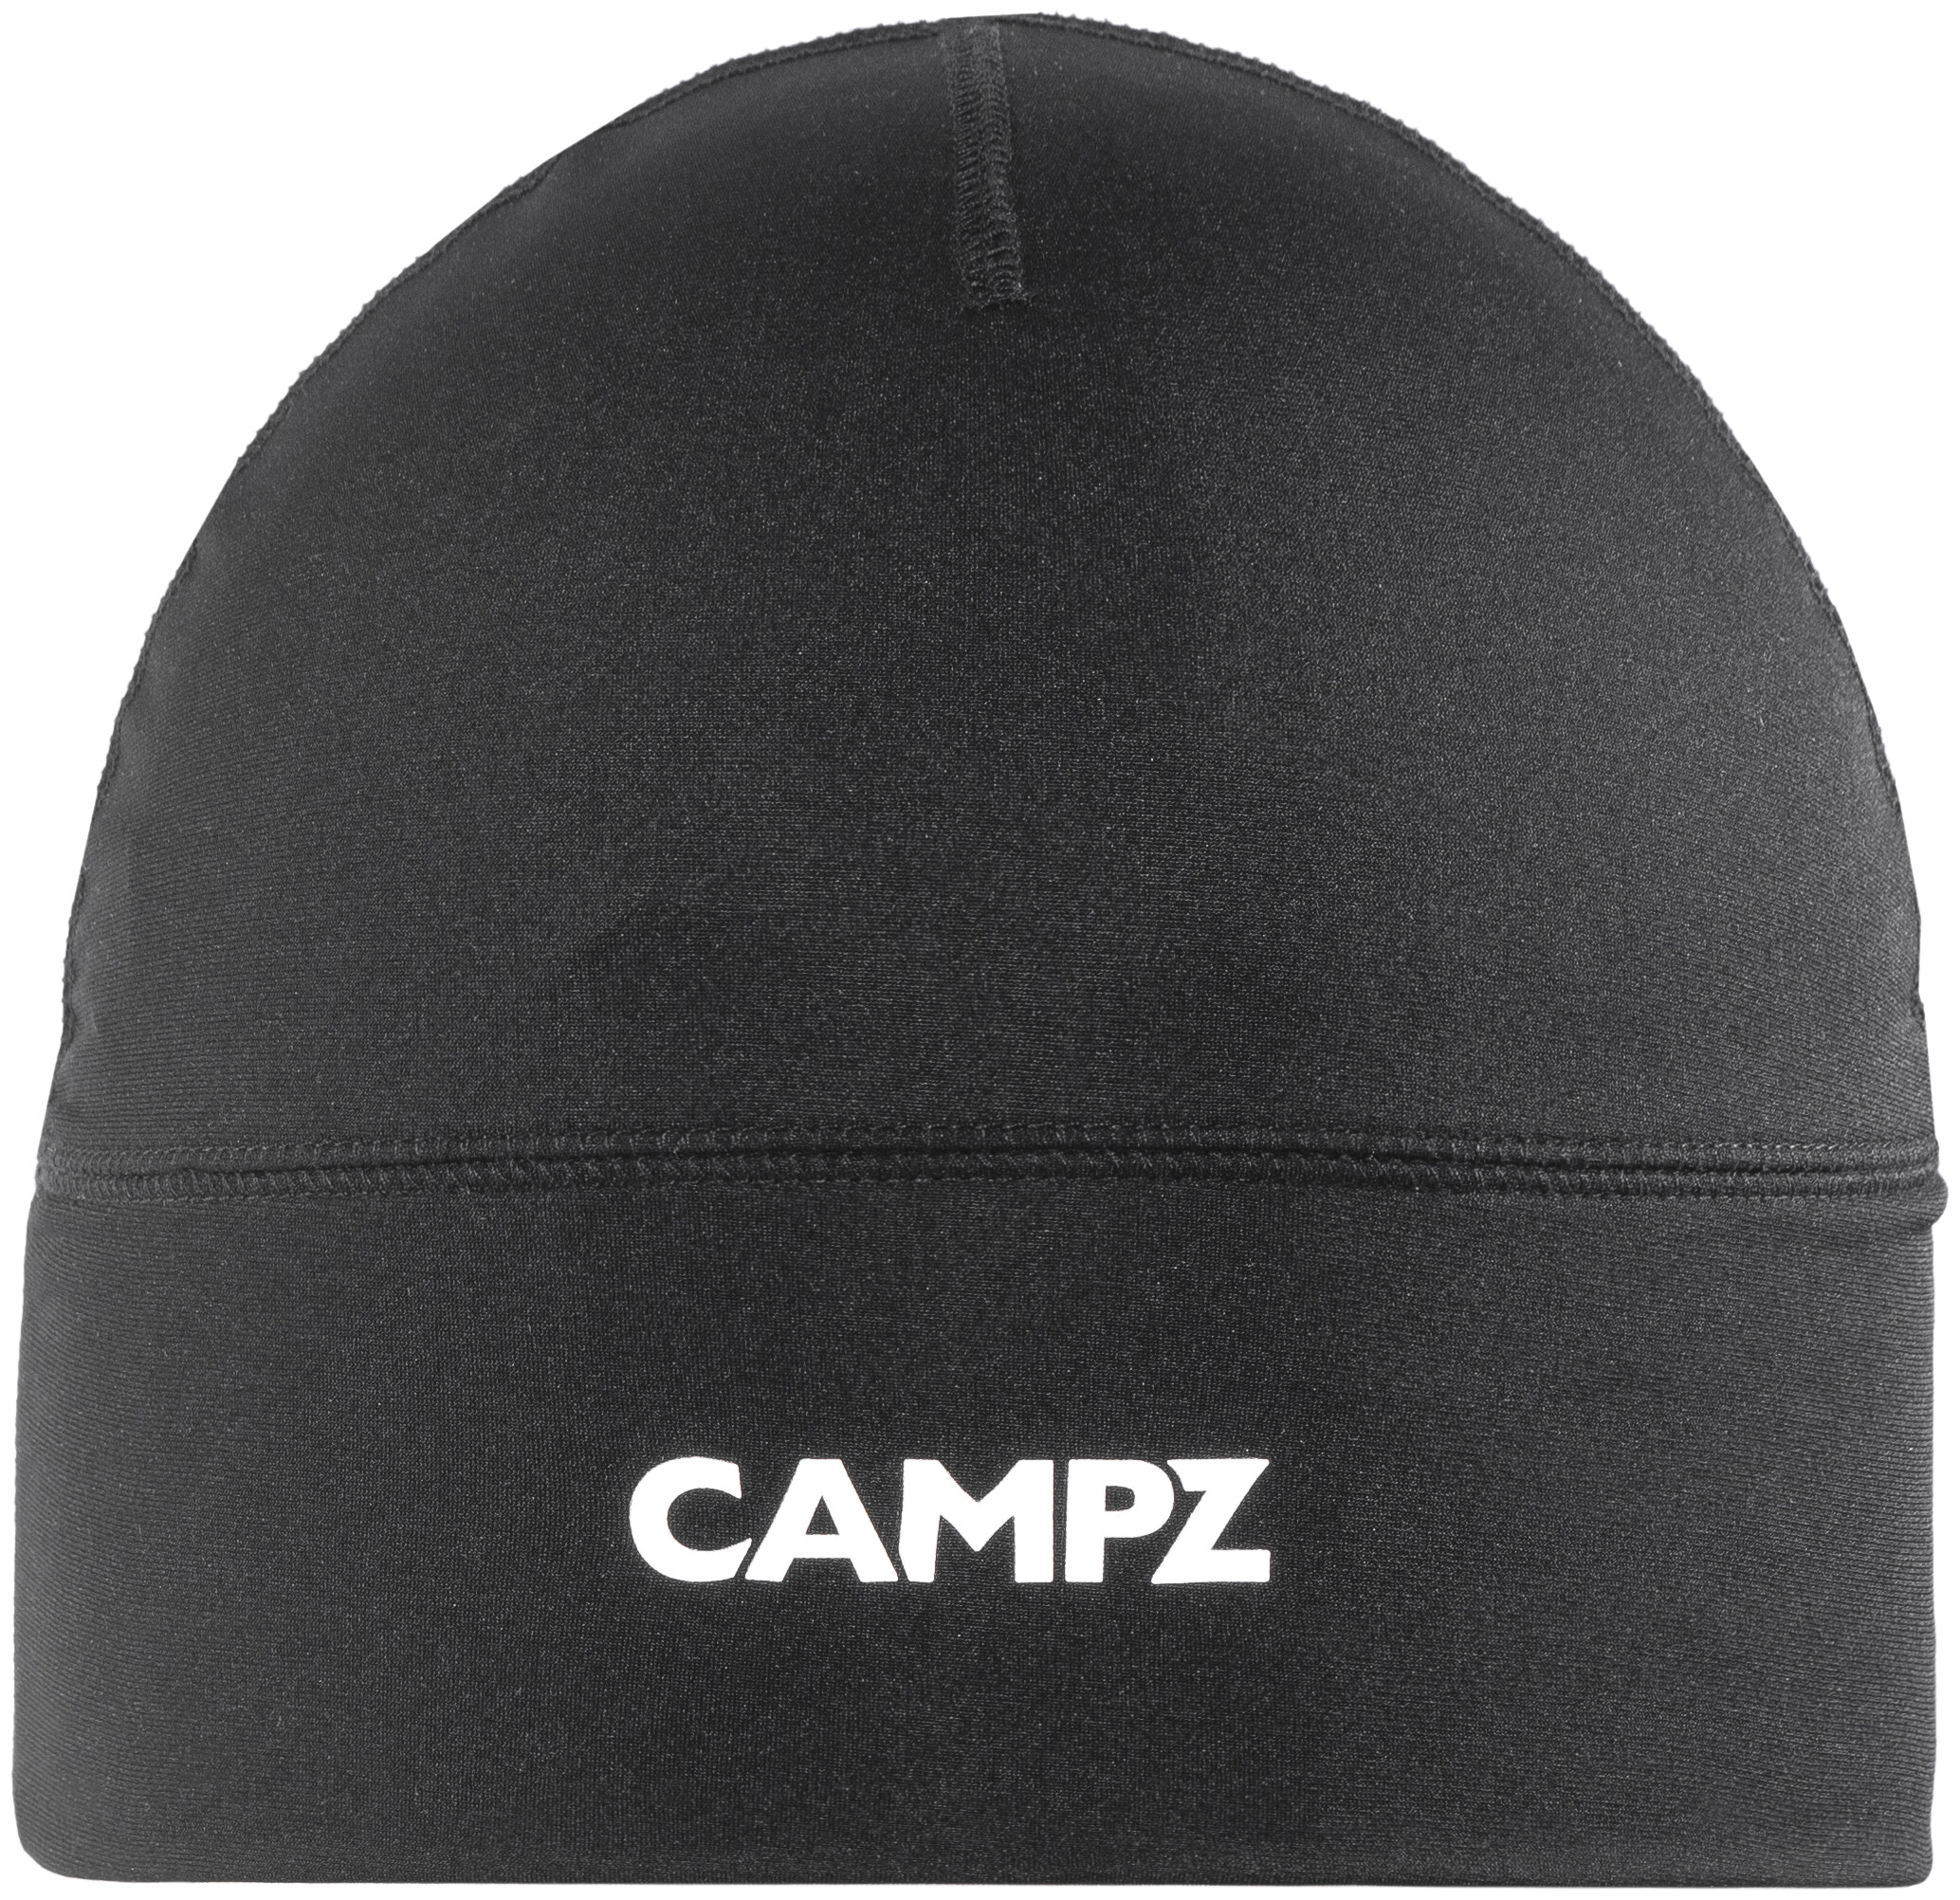 CAMPZ Fleece Beanie-Mütze schwarz